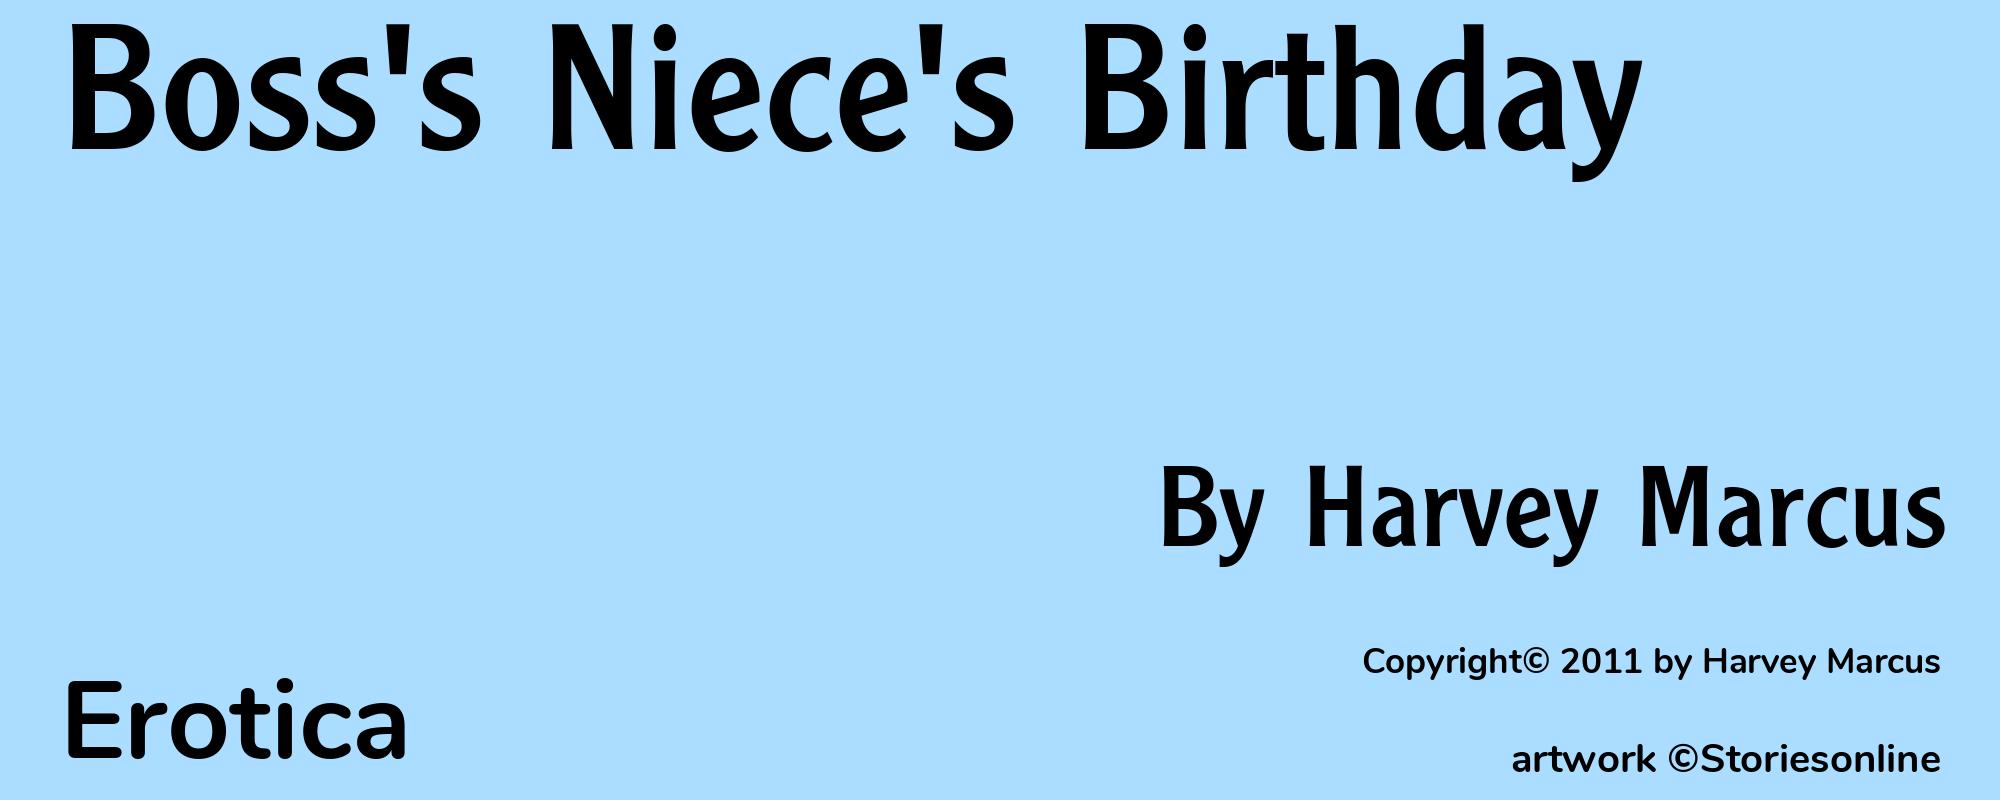 Boss's Niece's Birthday - Cover